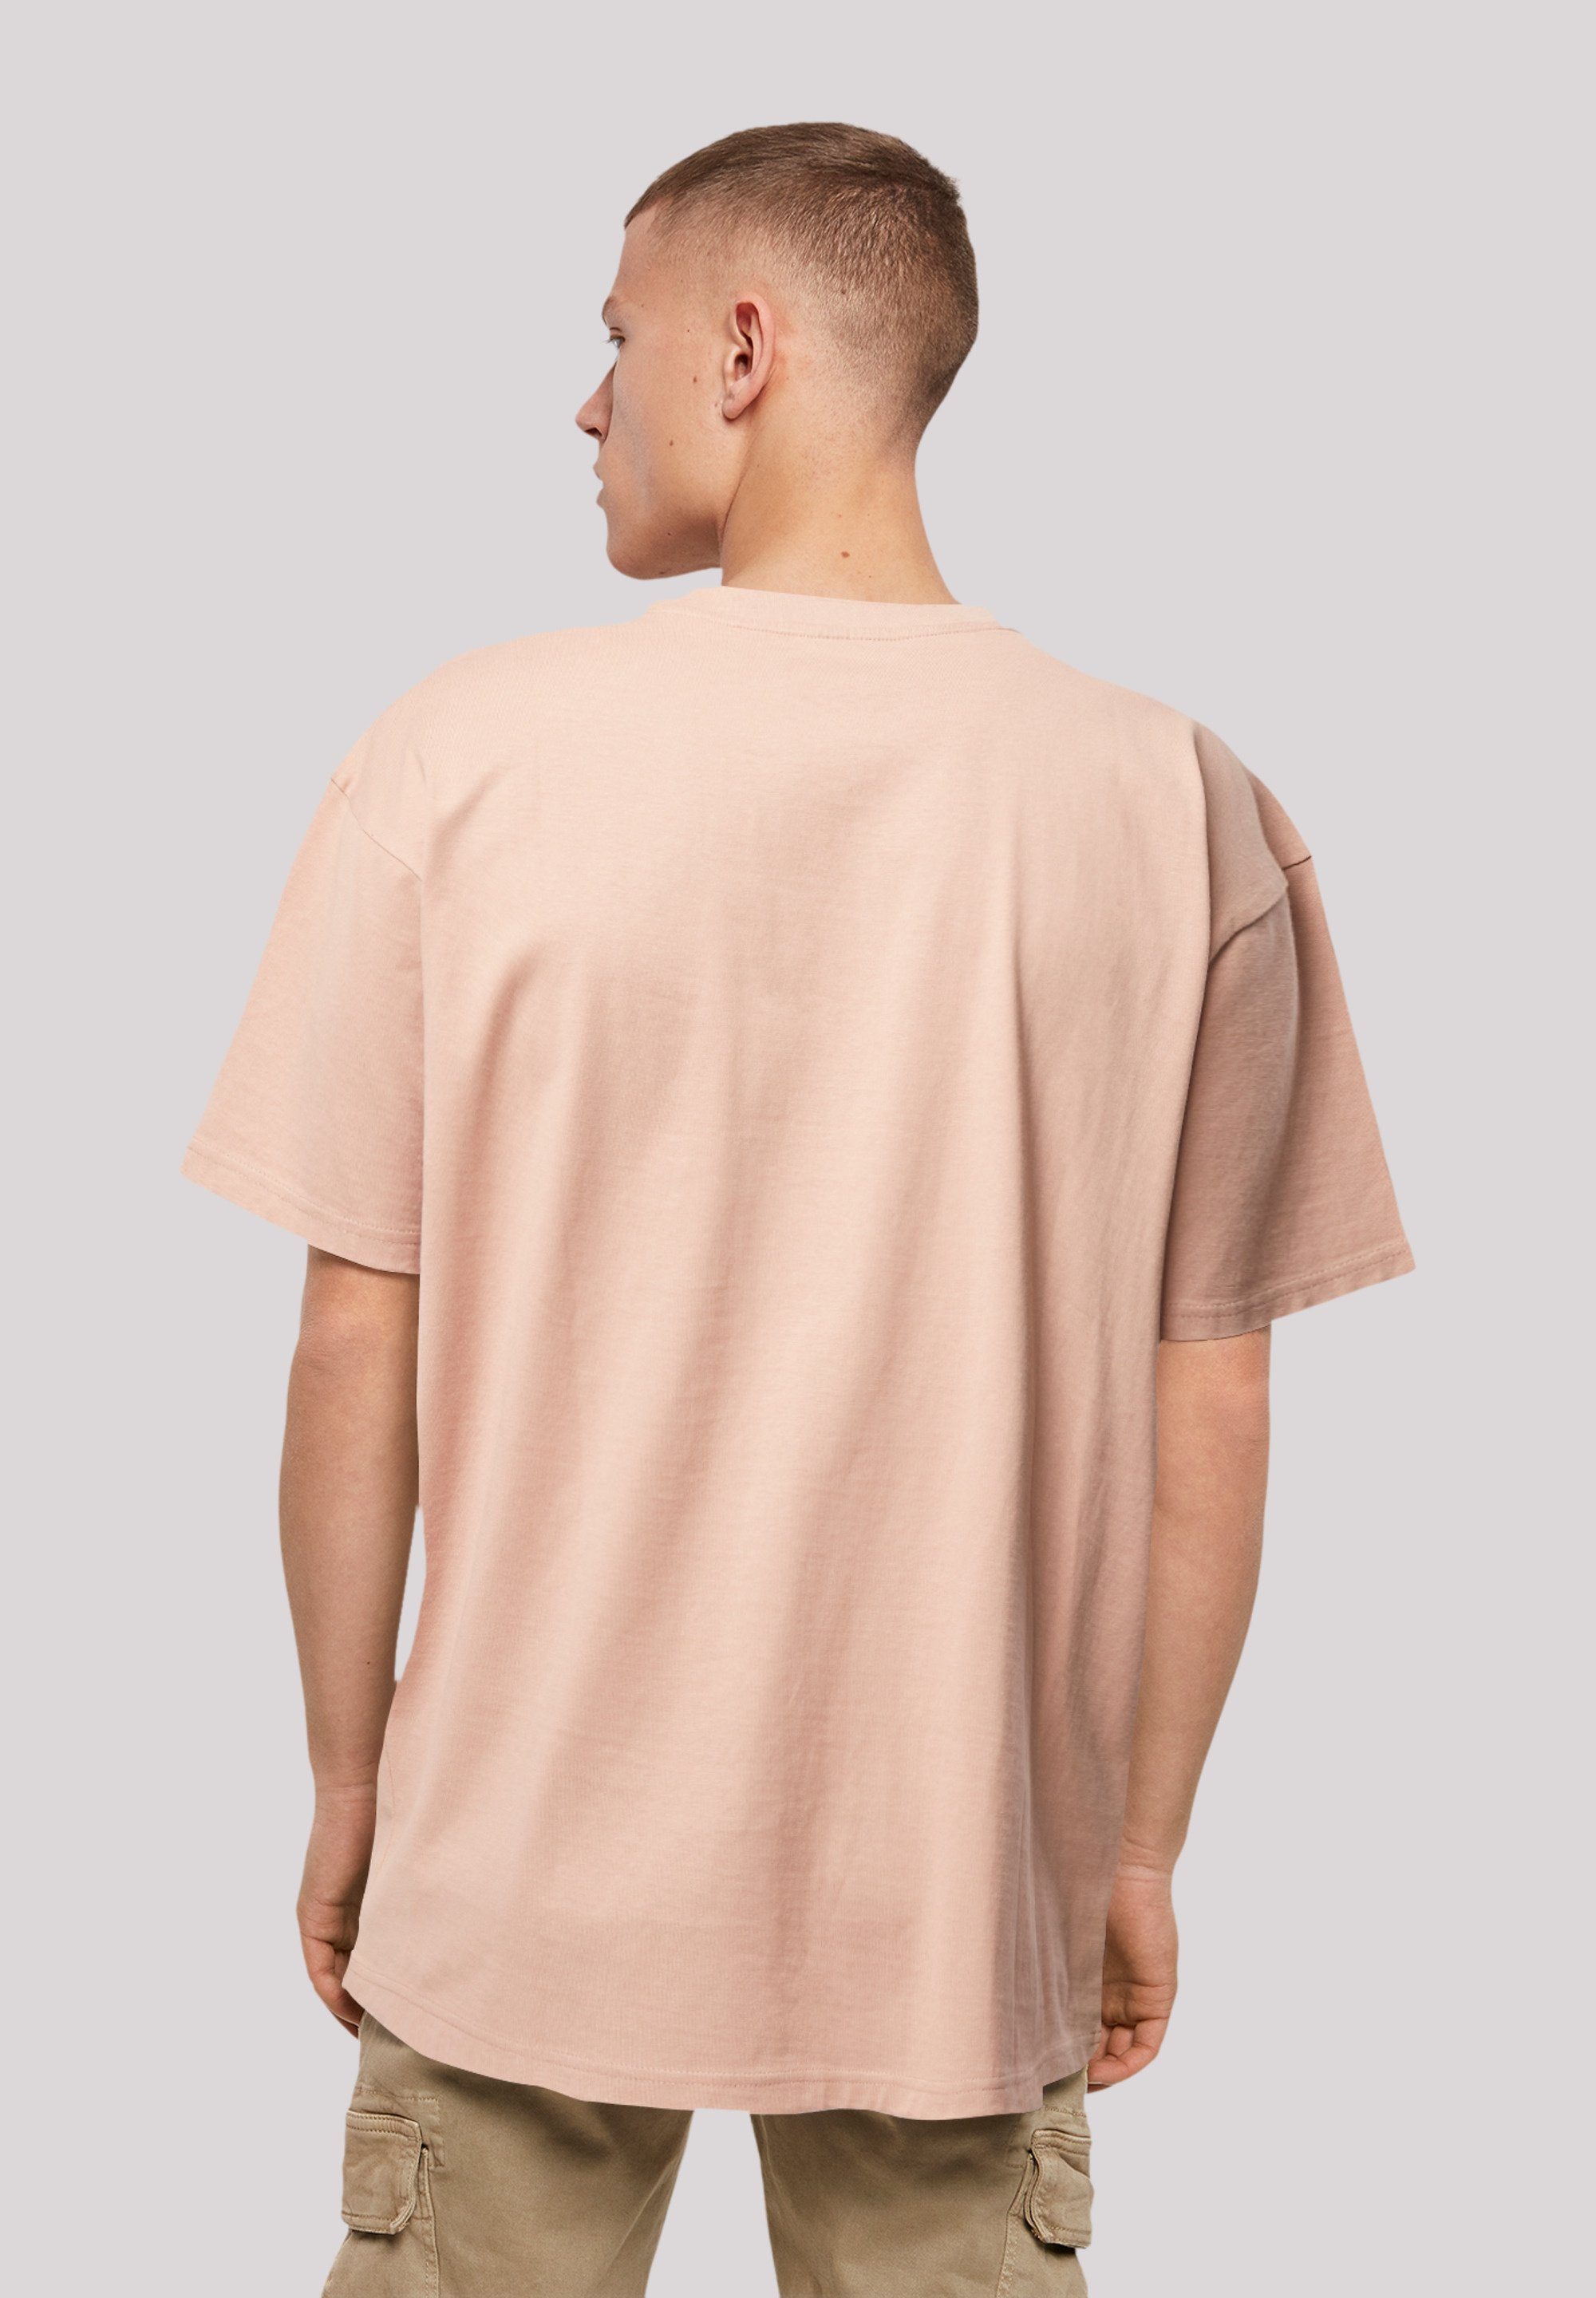 JAM amber Showjumping T-Shirt F4NT4STIC Print